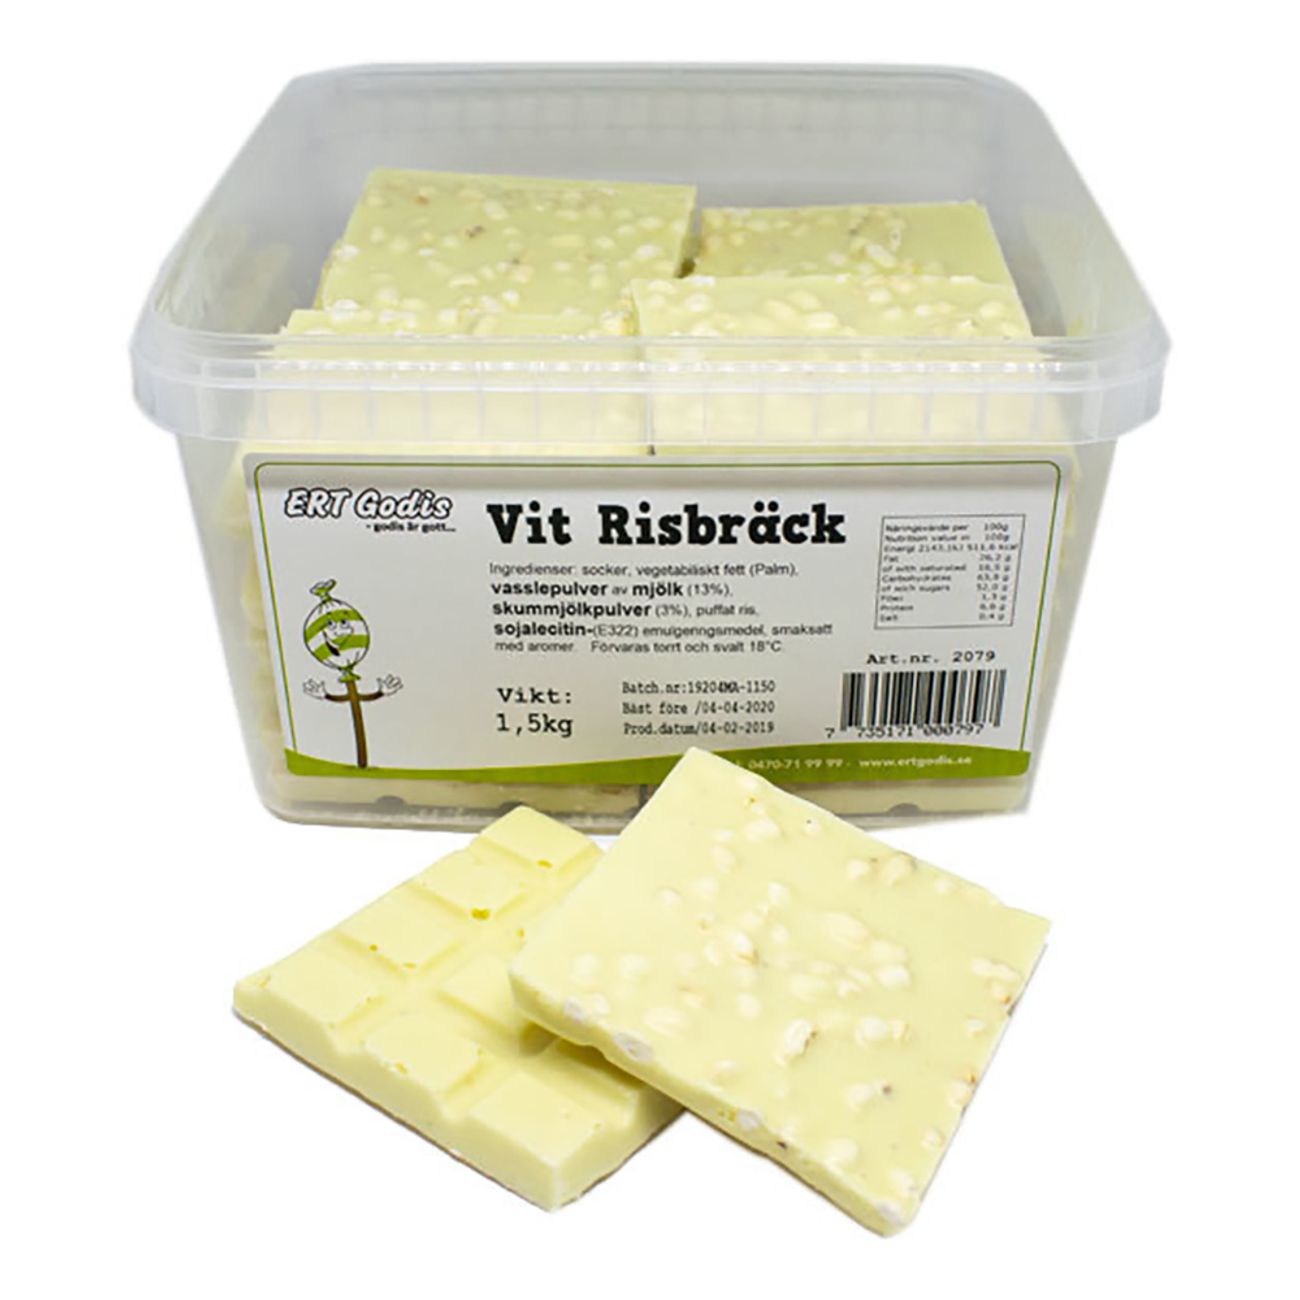 vit-risbrack-storpack-96422-2